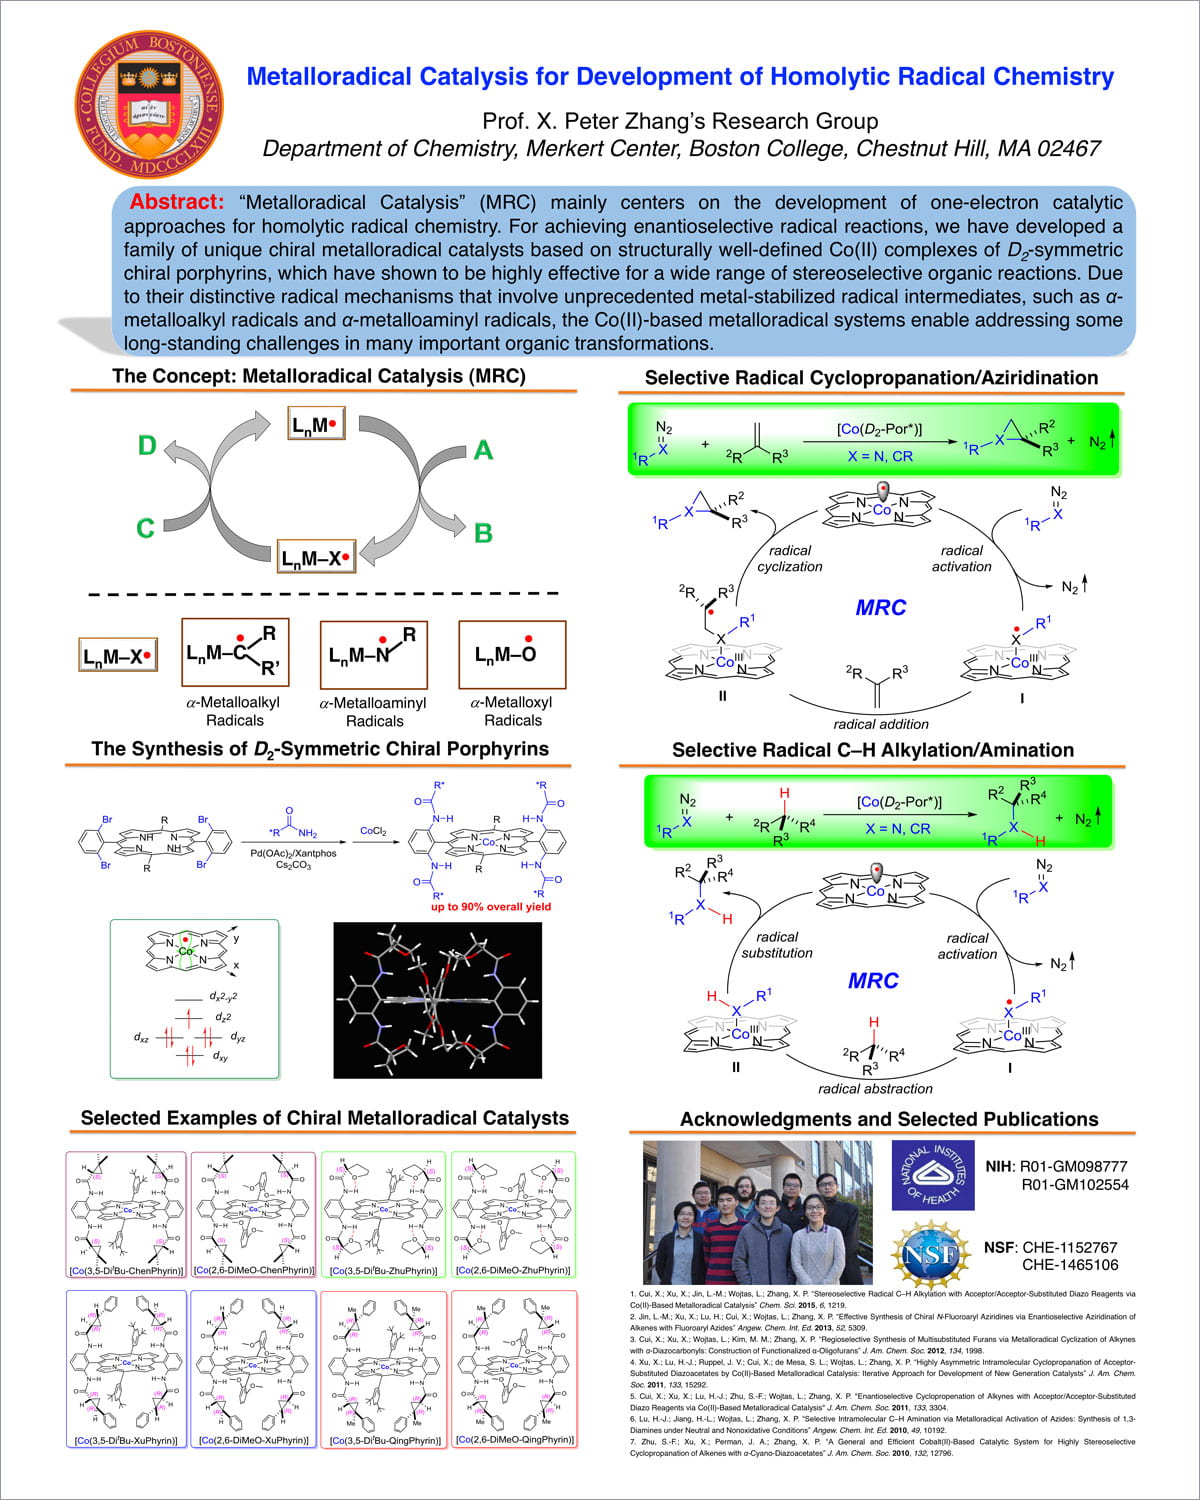 MRC - Homolytic Radical Chemistry poster image